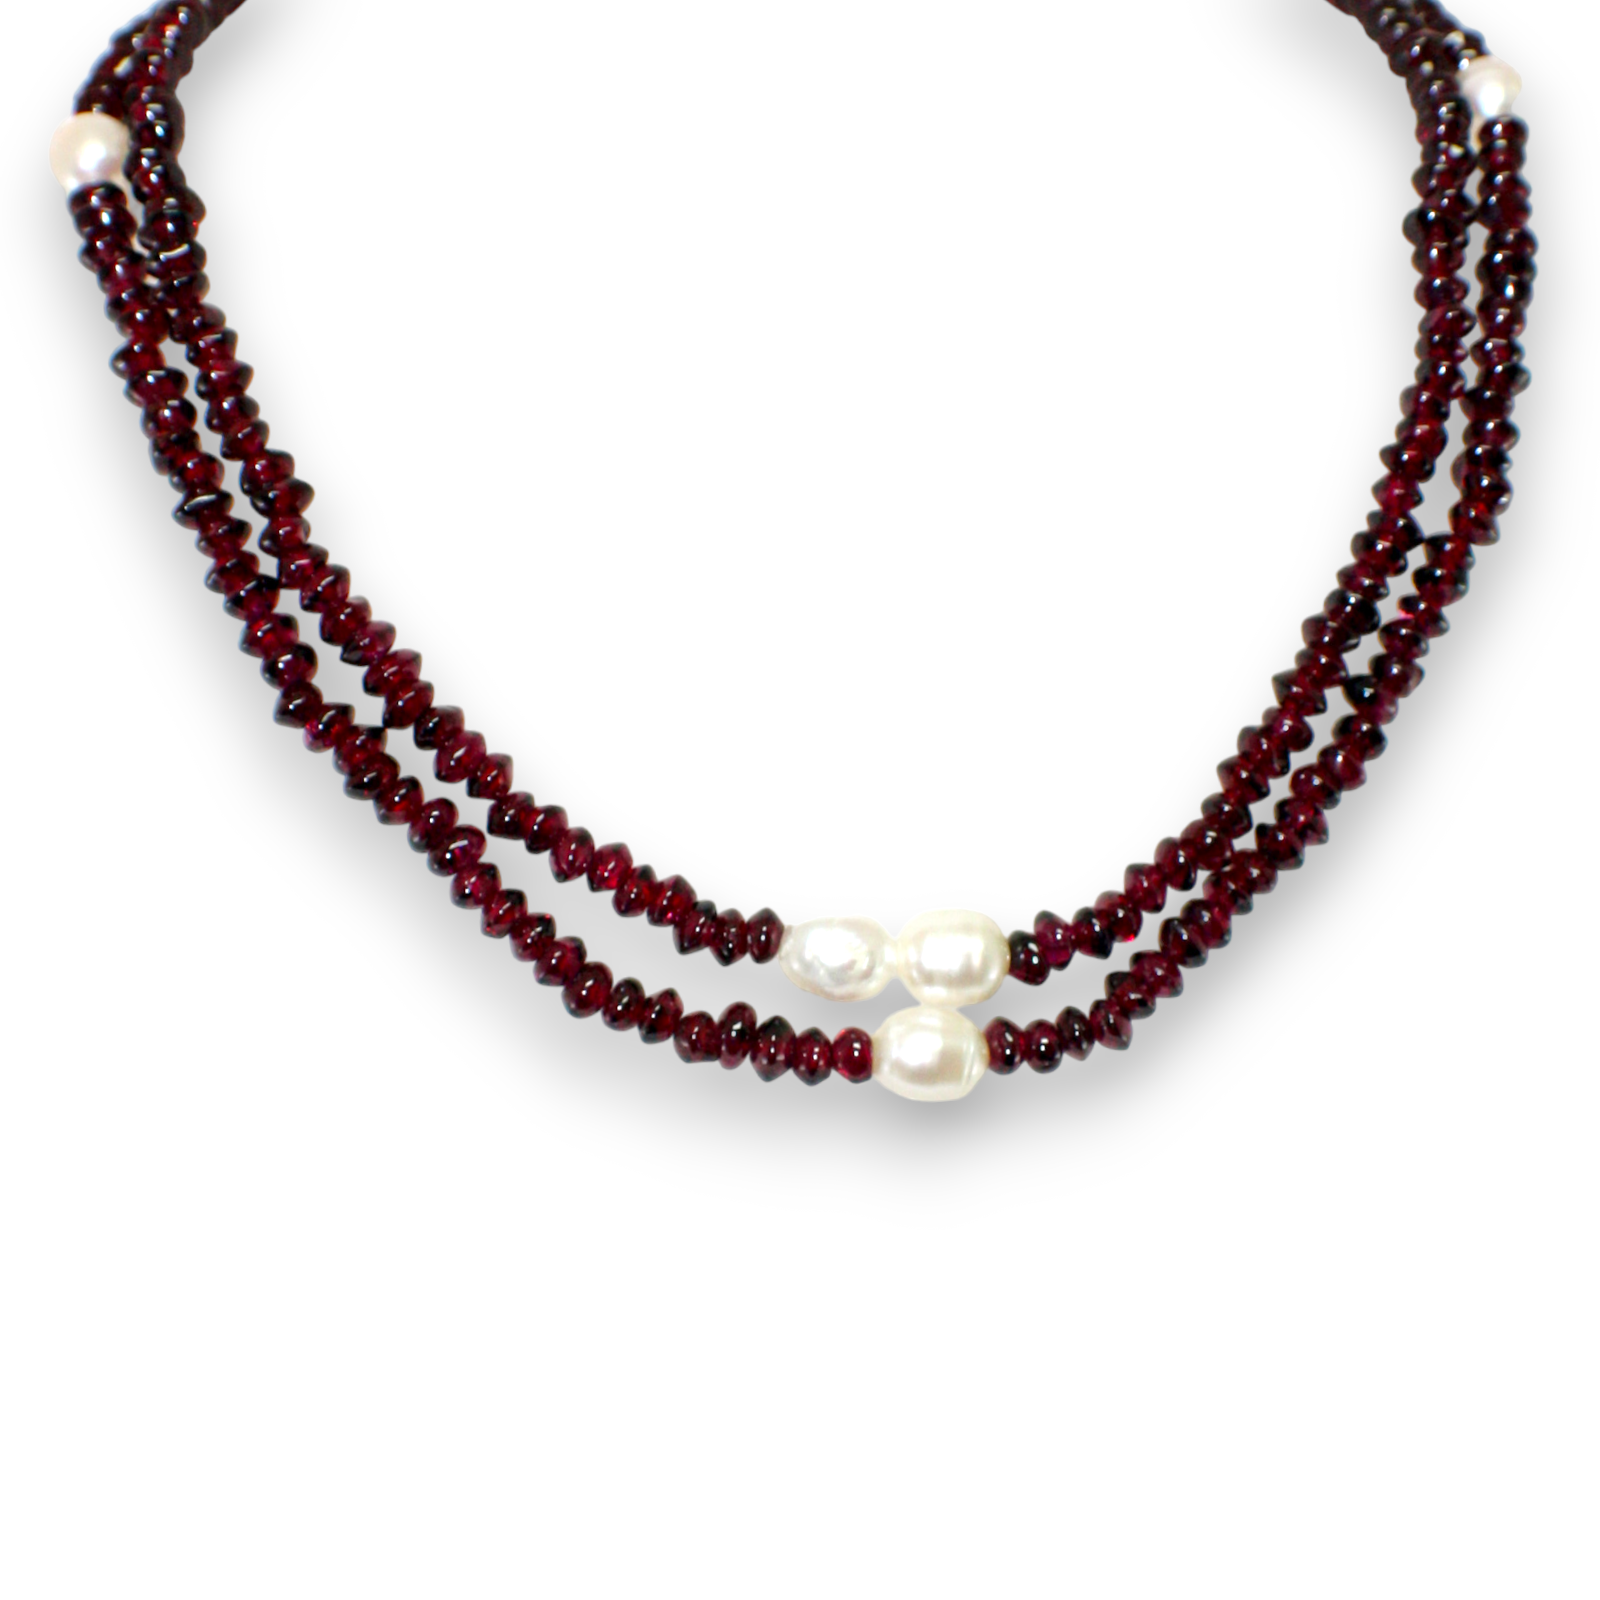 Natural Handmade Necklace 16"-18" Garnet Pearls Layered Gem Beads Jewelry